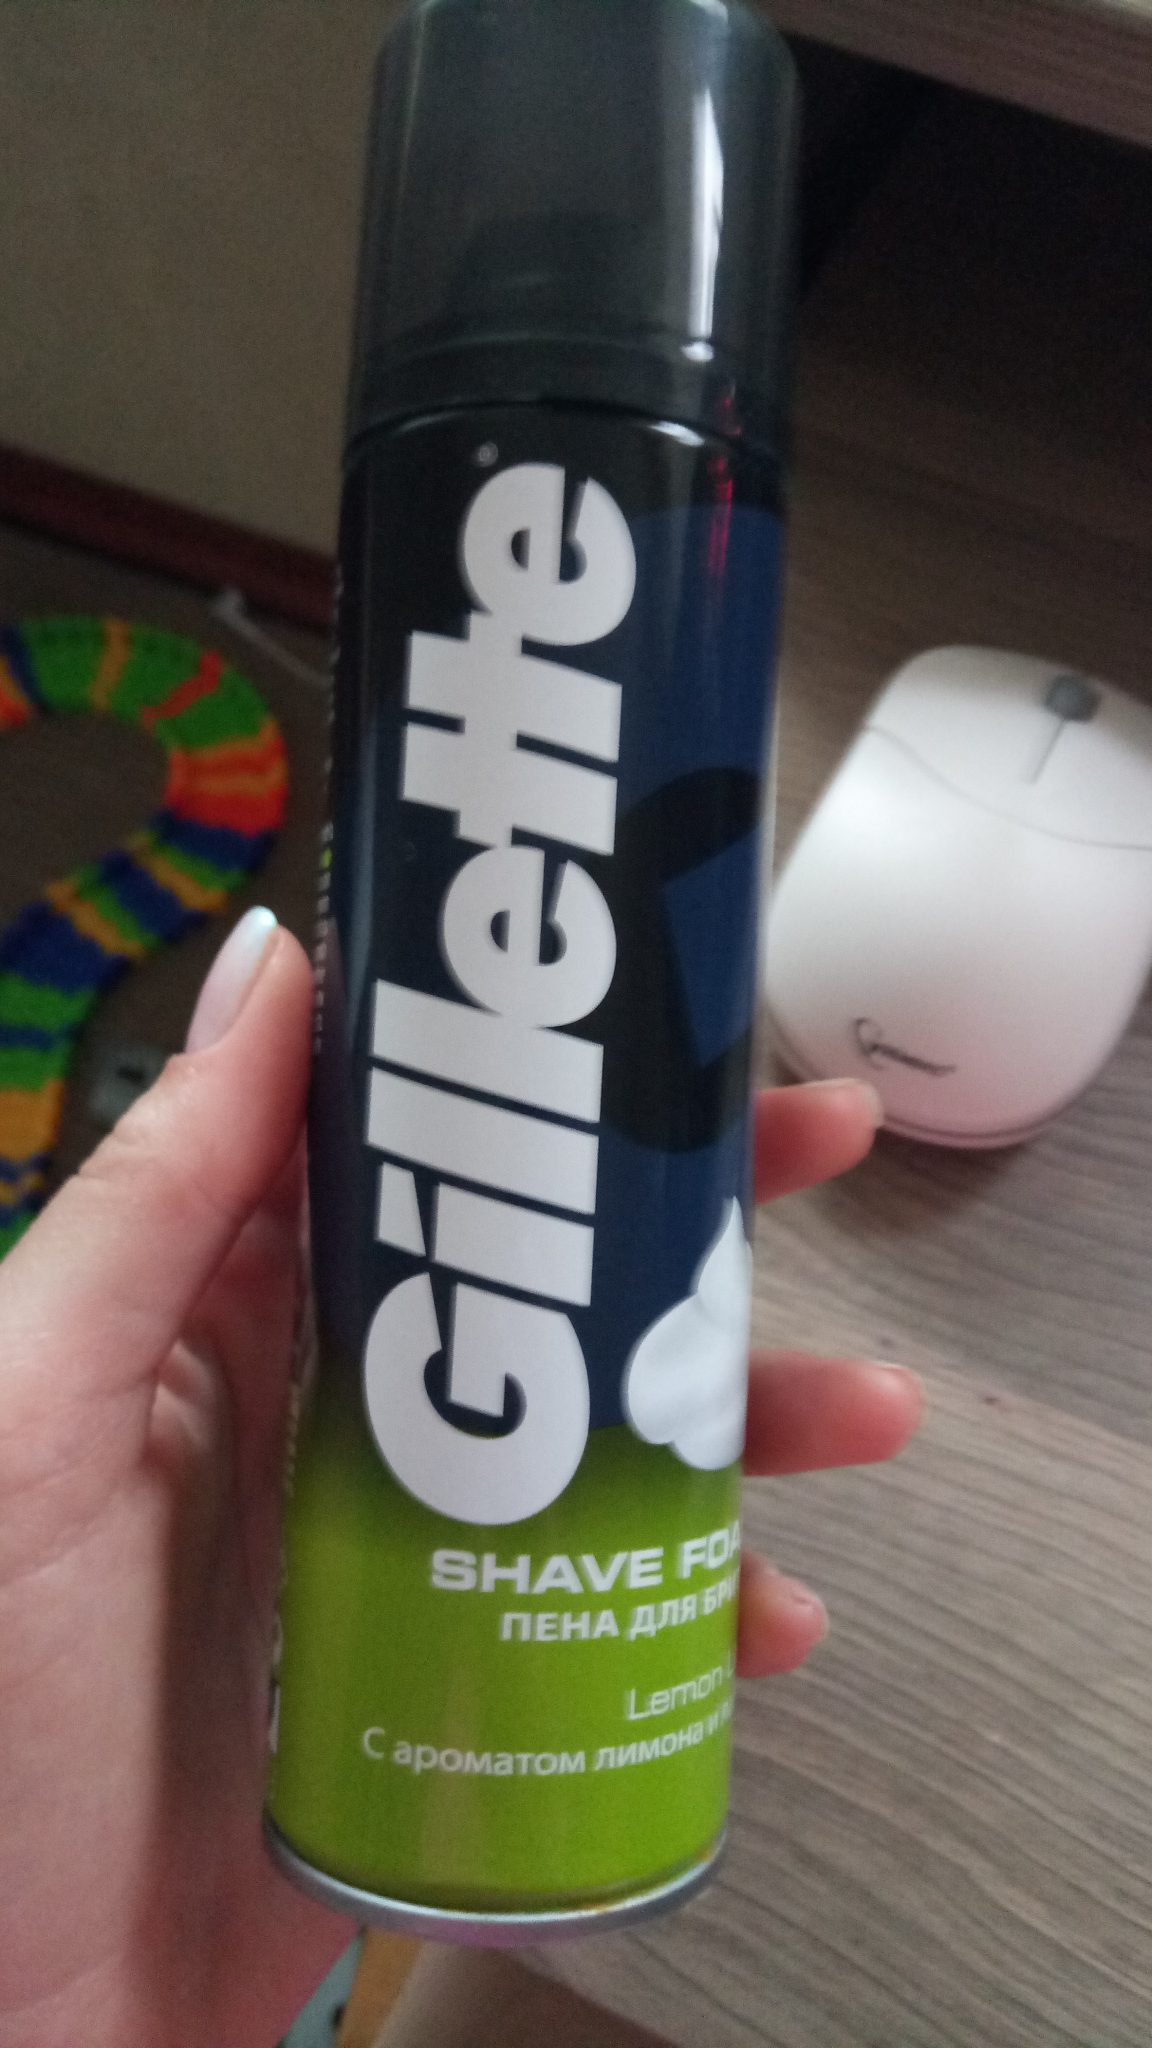 Пена для бритья Gillette Shave Foam Lemon Lime. Отзыв.